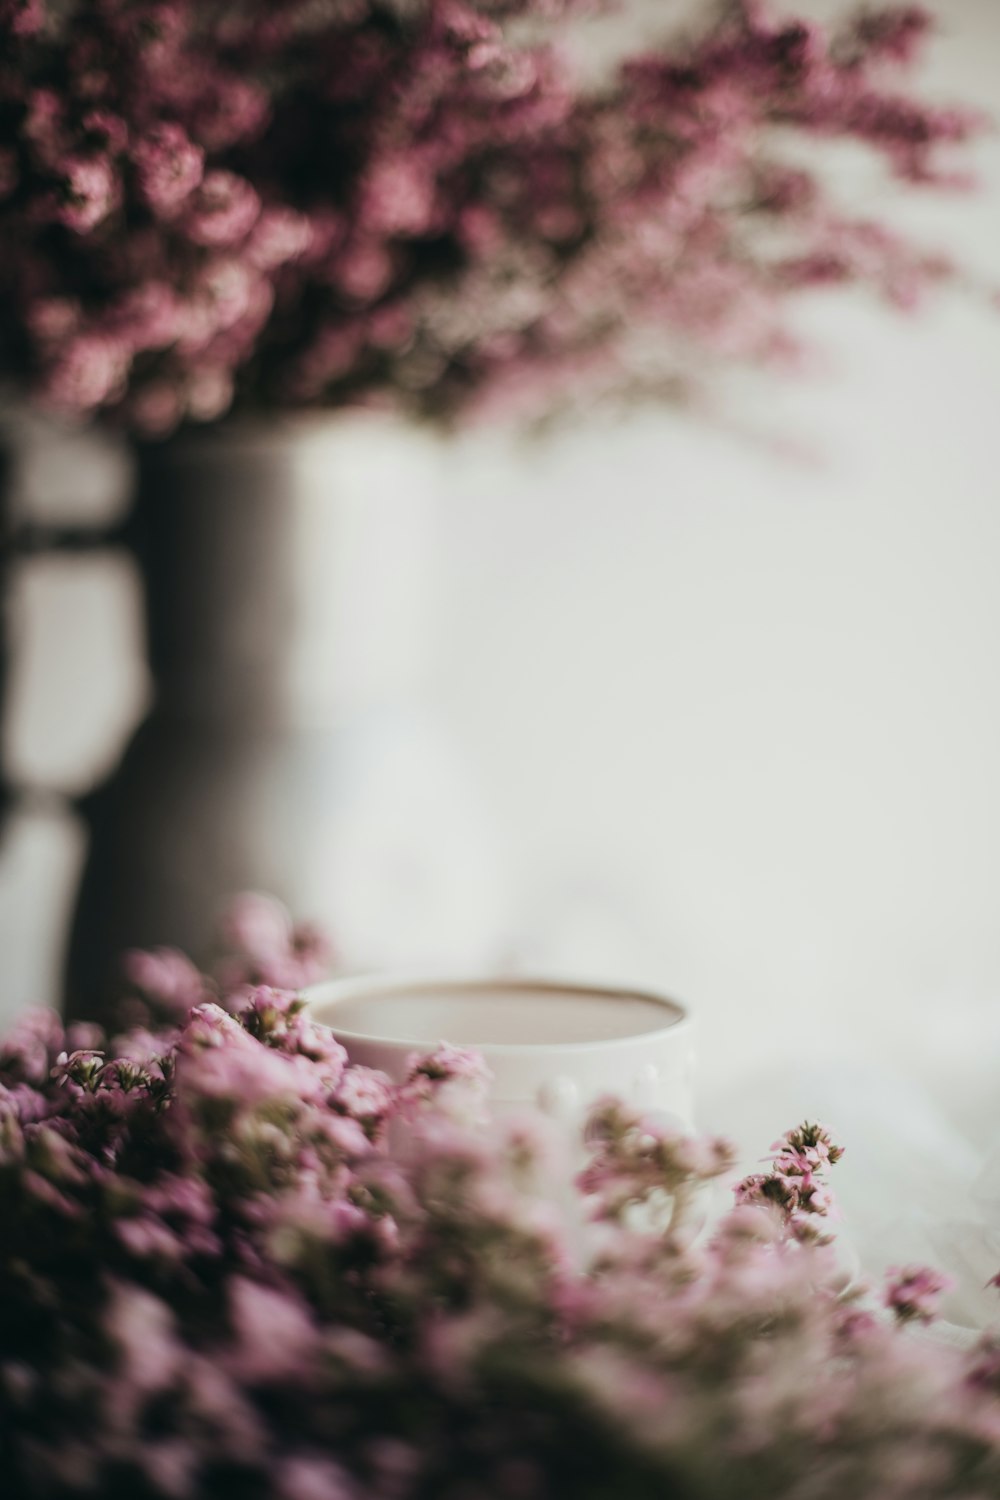 Fiori viola accanto a tazza in ceramica bianca